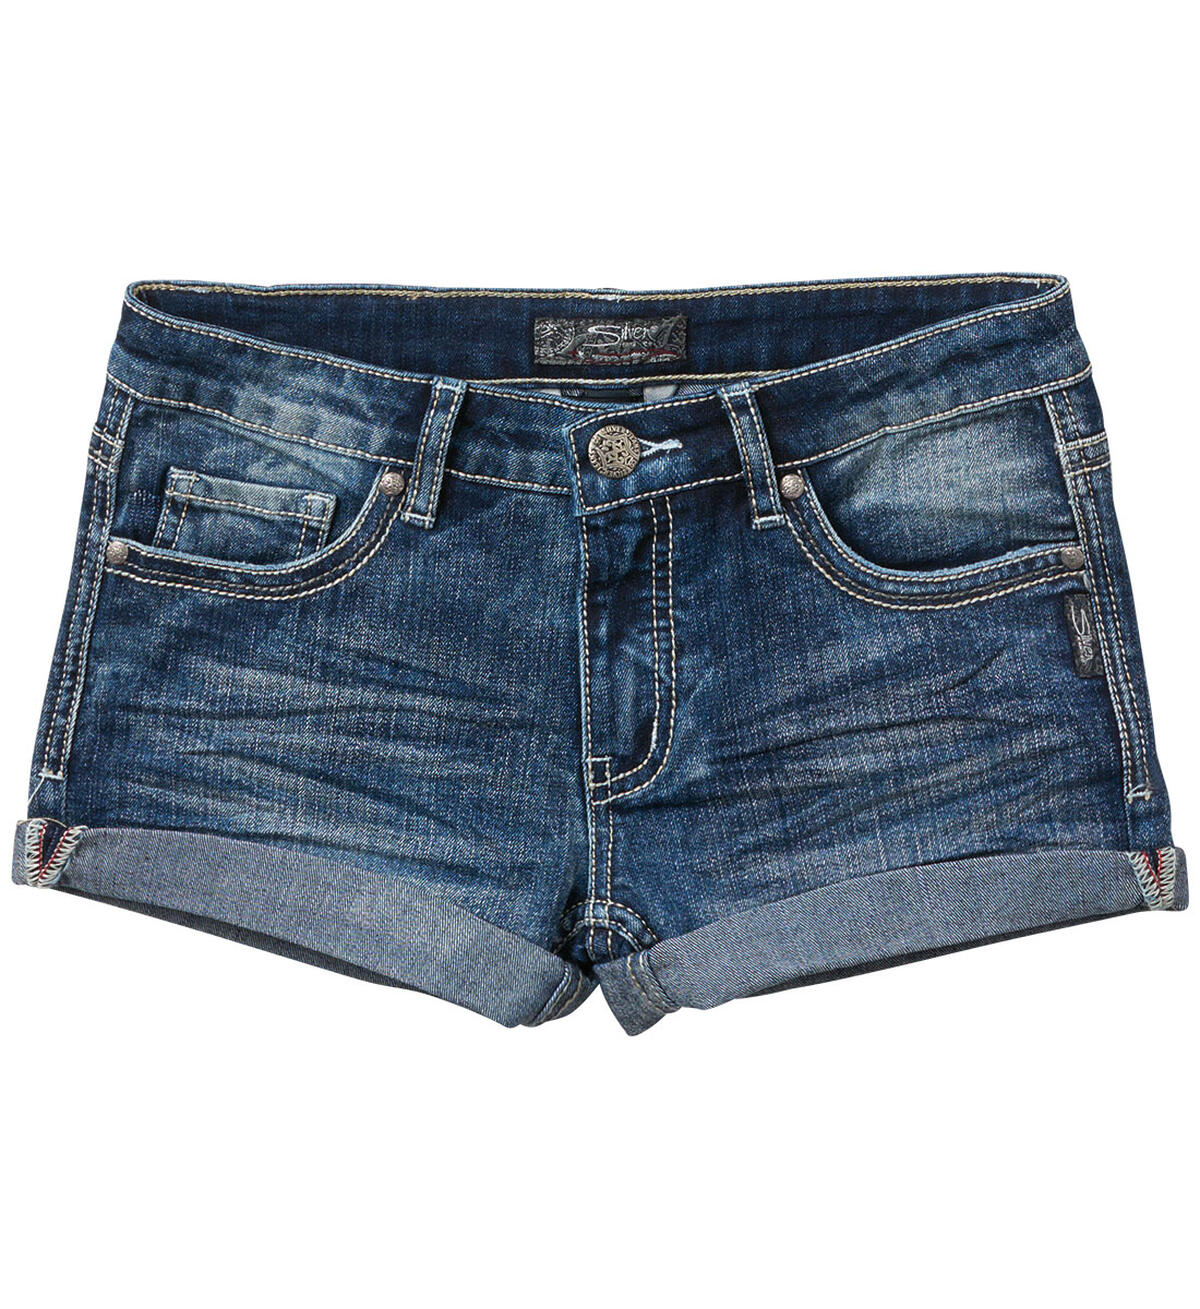 Lacy Cuffed Denim Shorts in Medium Wash (7-16), , hi-res image number 0